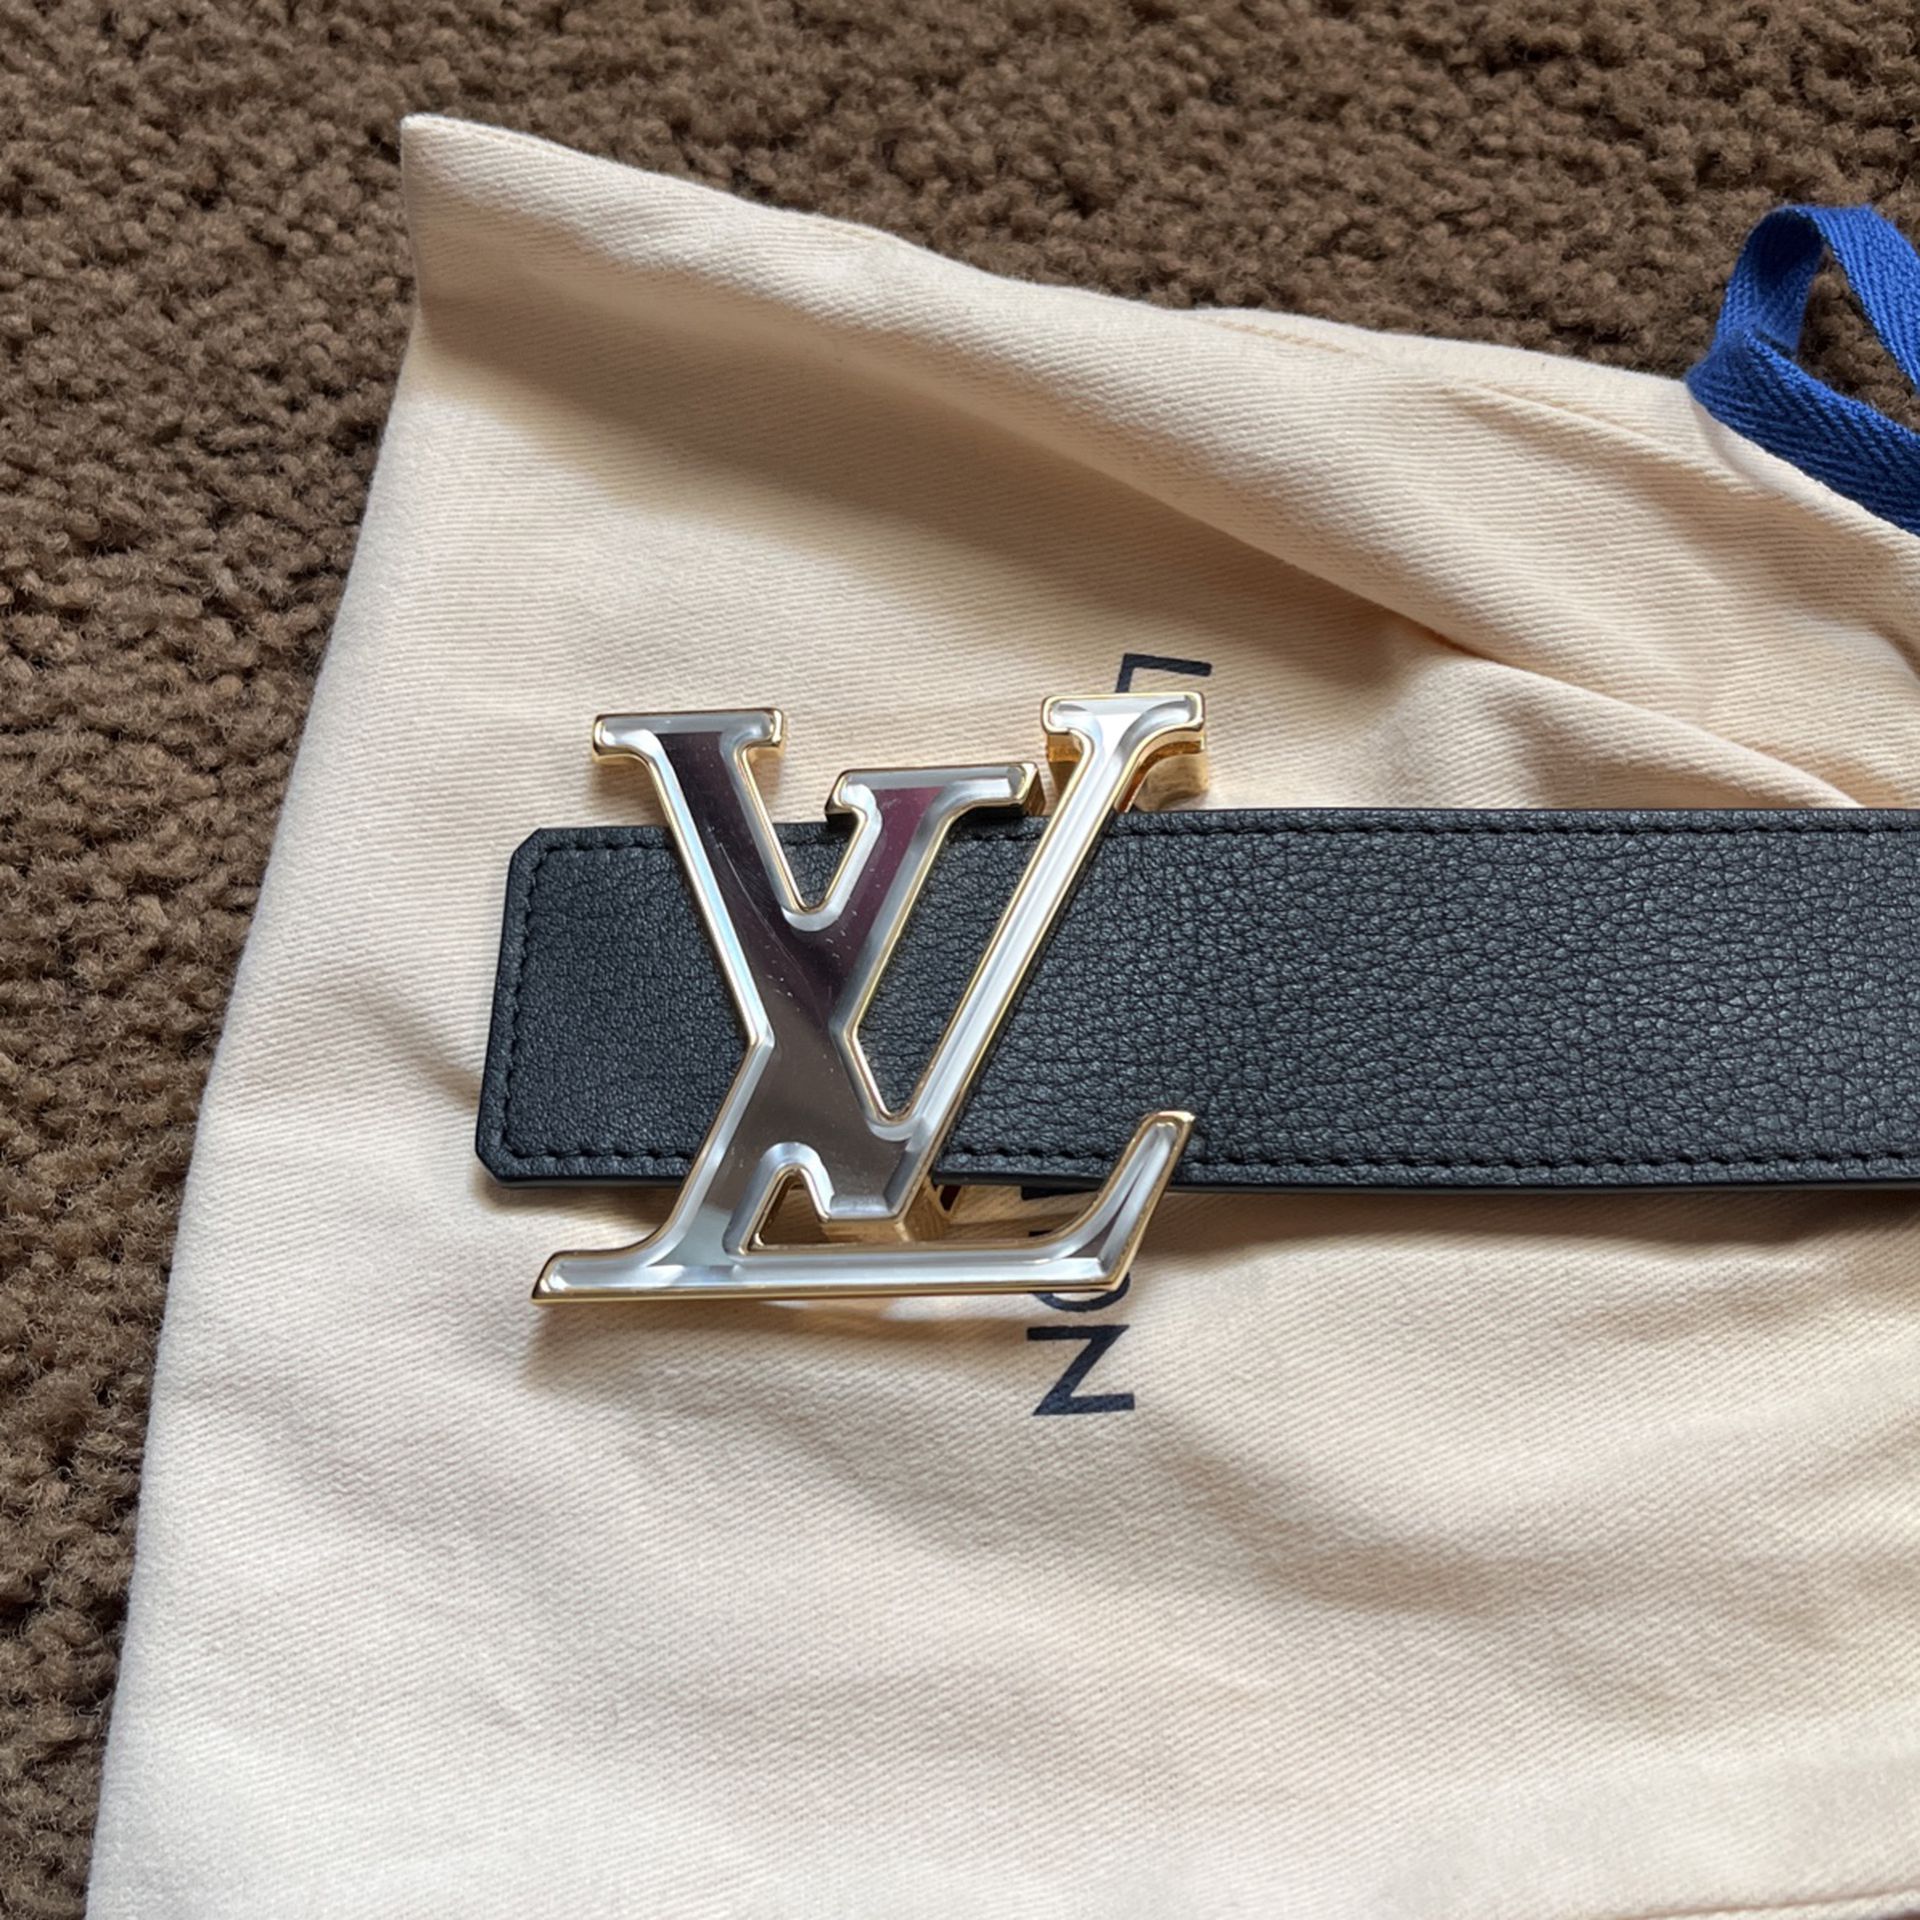 Louis Vuitton Belt Size 90/36 Men's for Sale in Santa Ana, CA